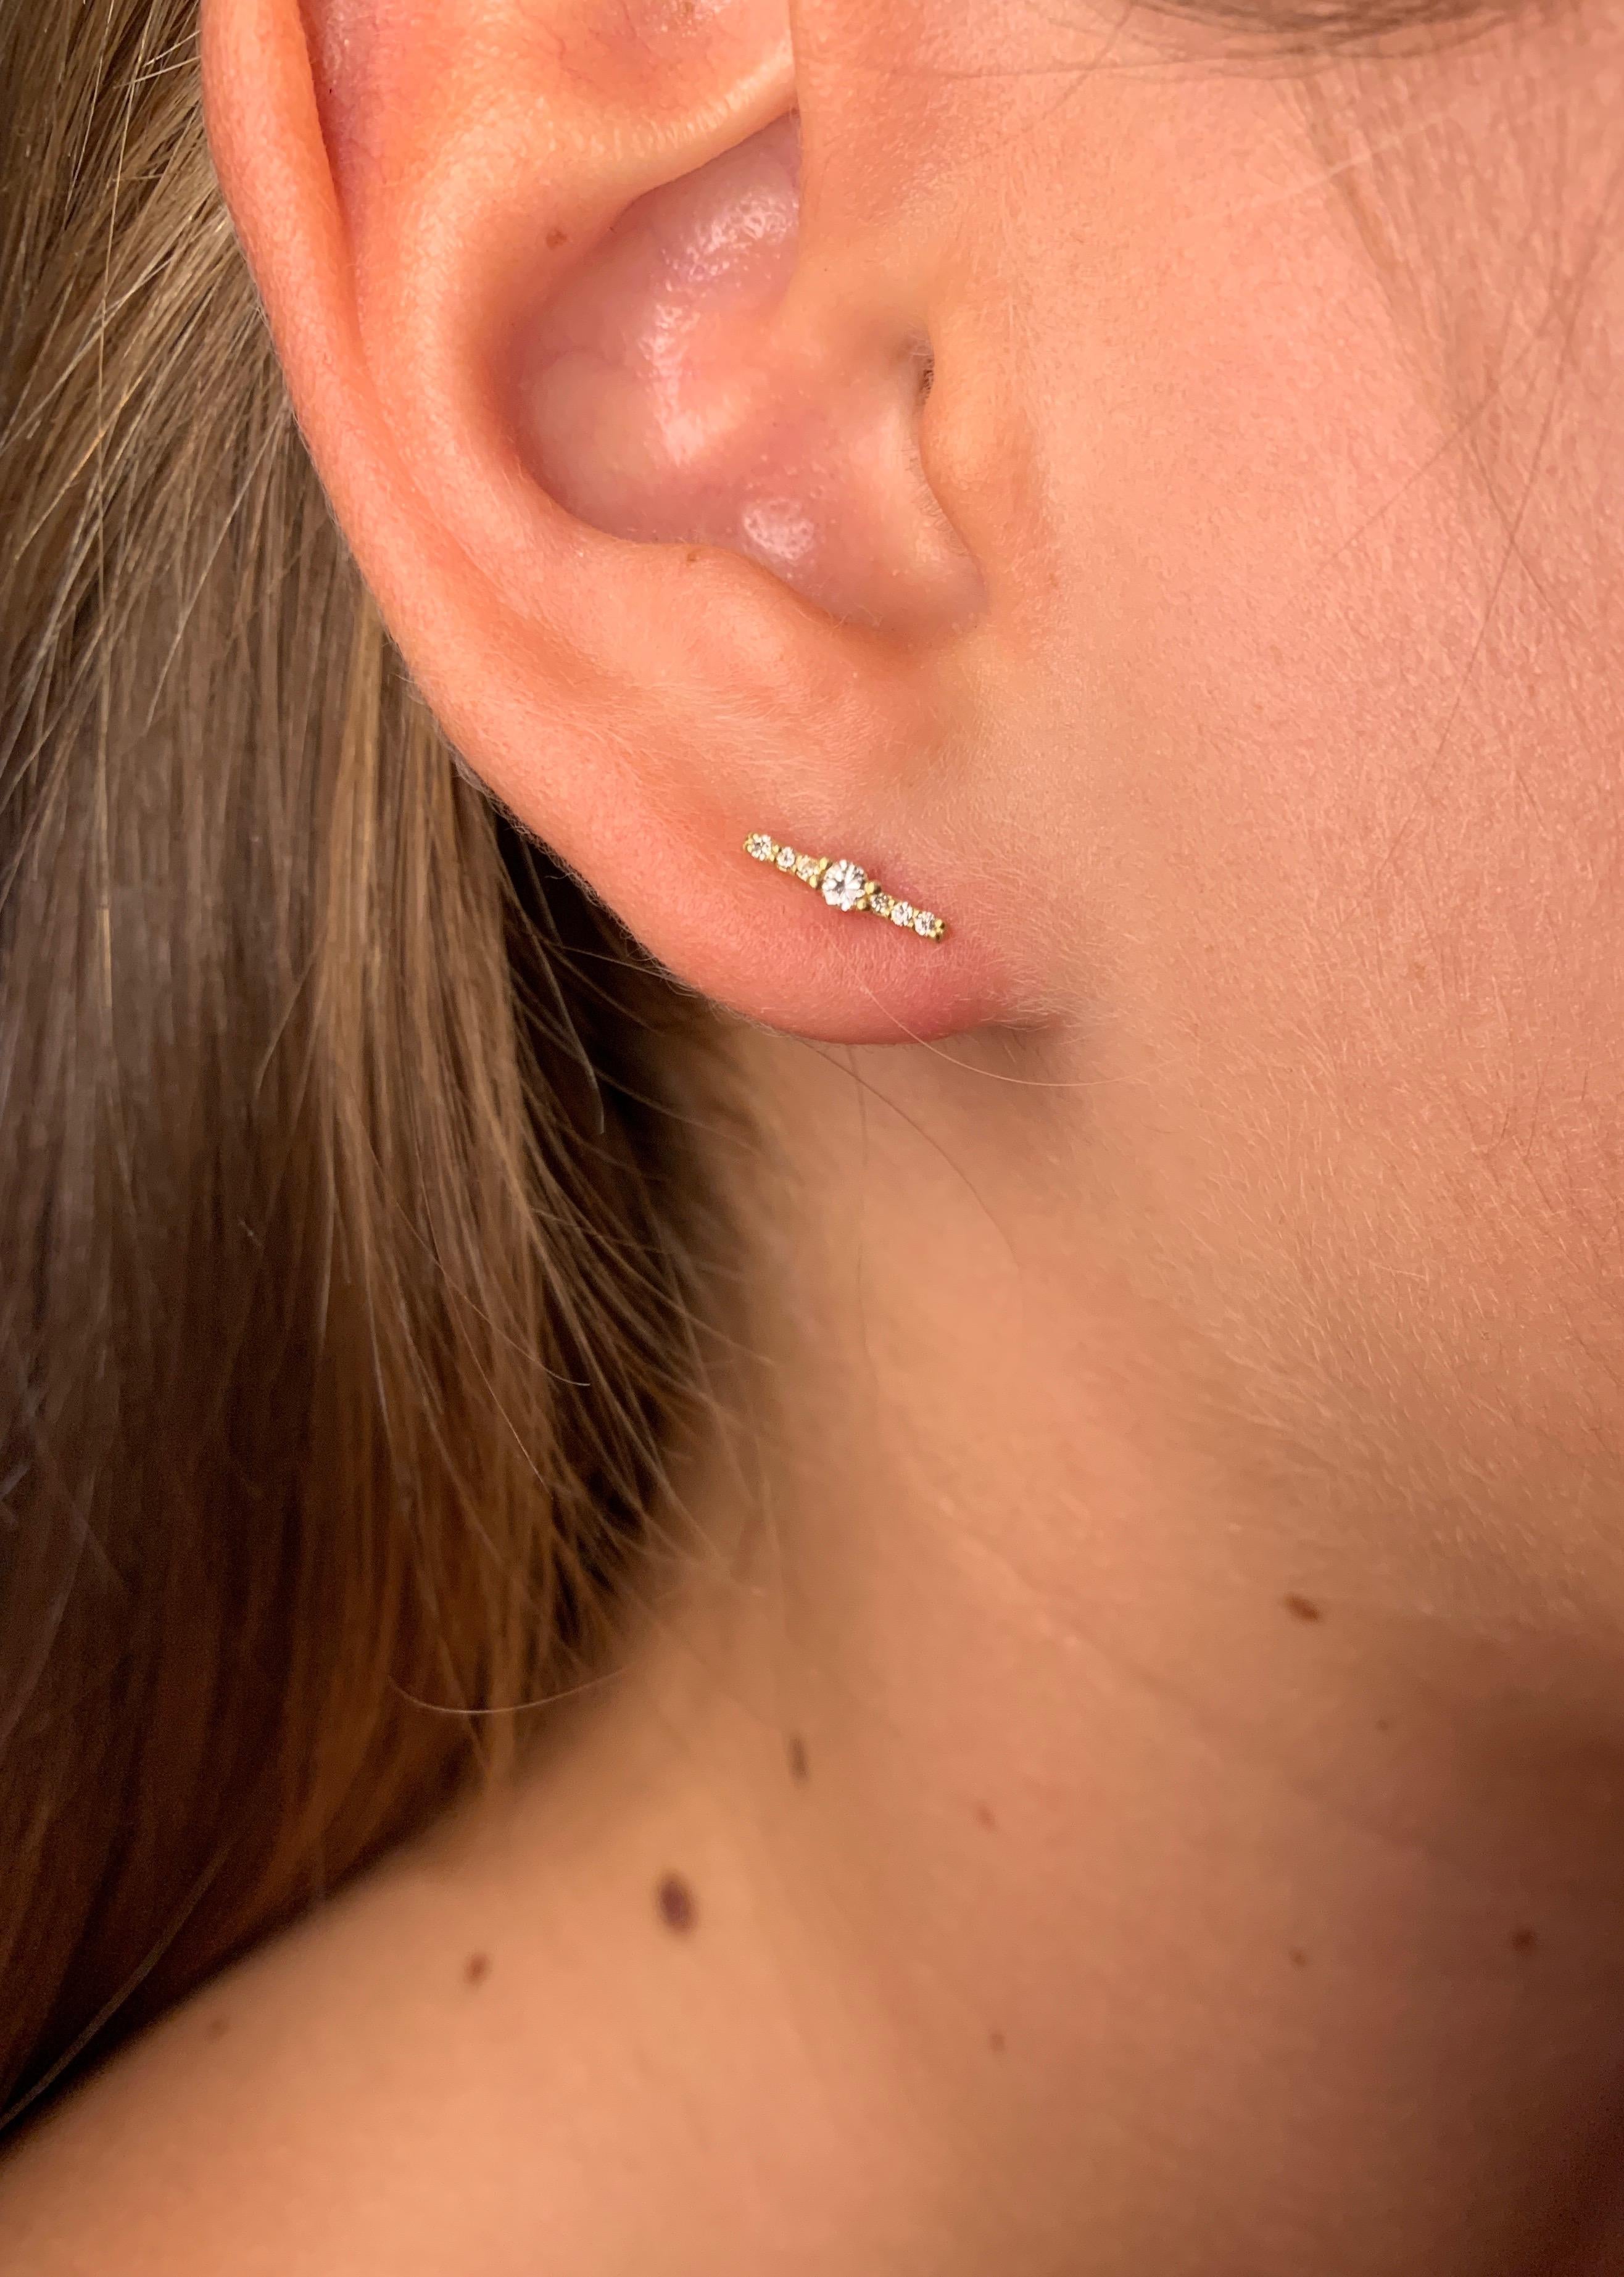 18k Yellow Gold Diamond Earring
Diamond weight .12ct
Approximately 3/8”